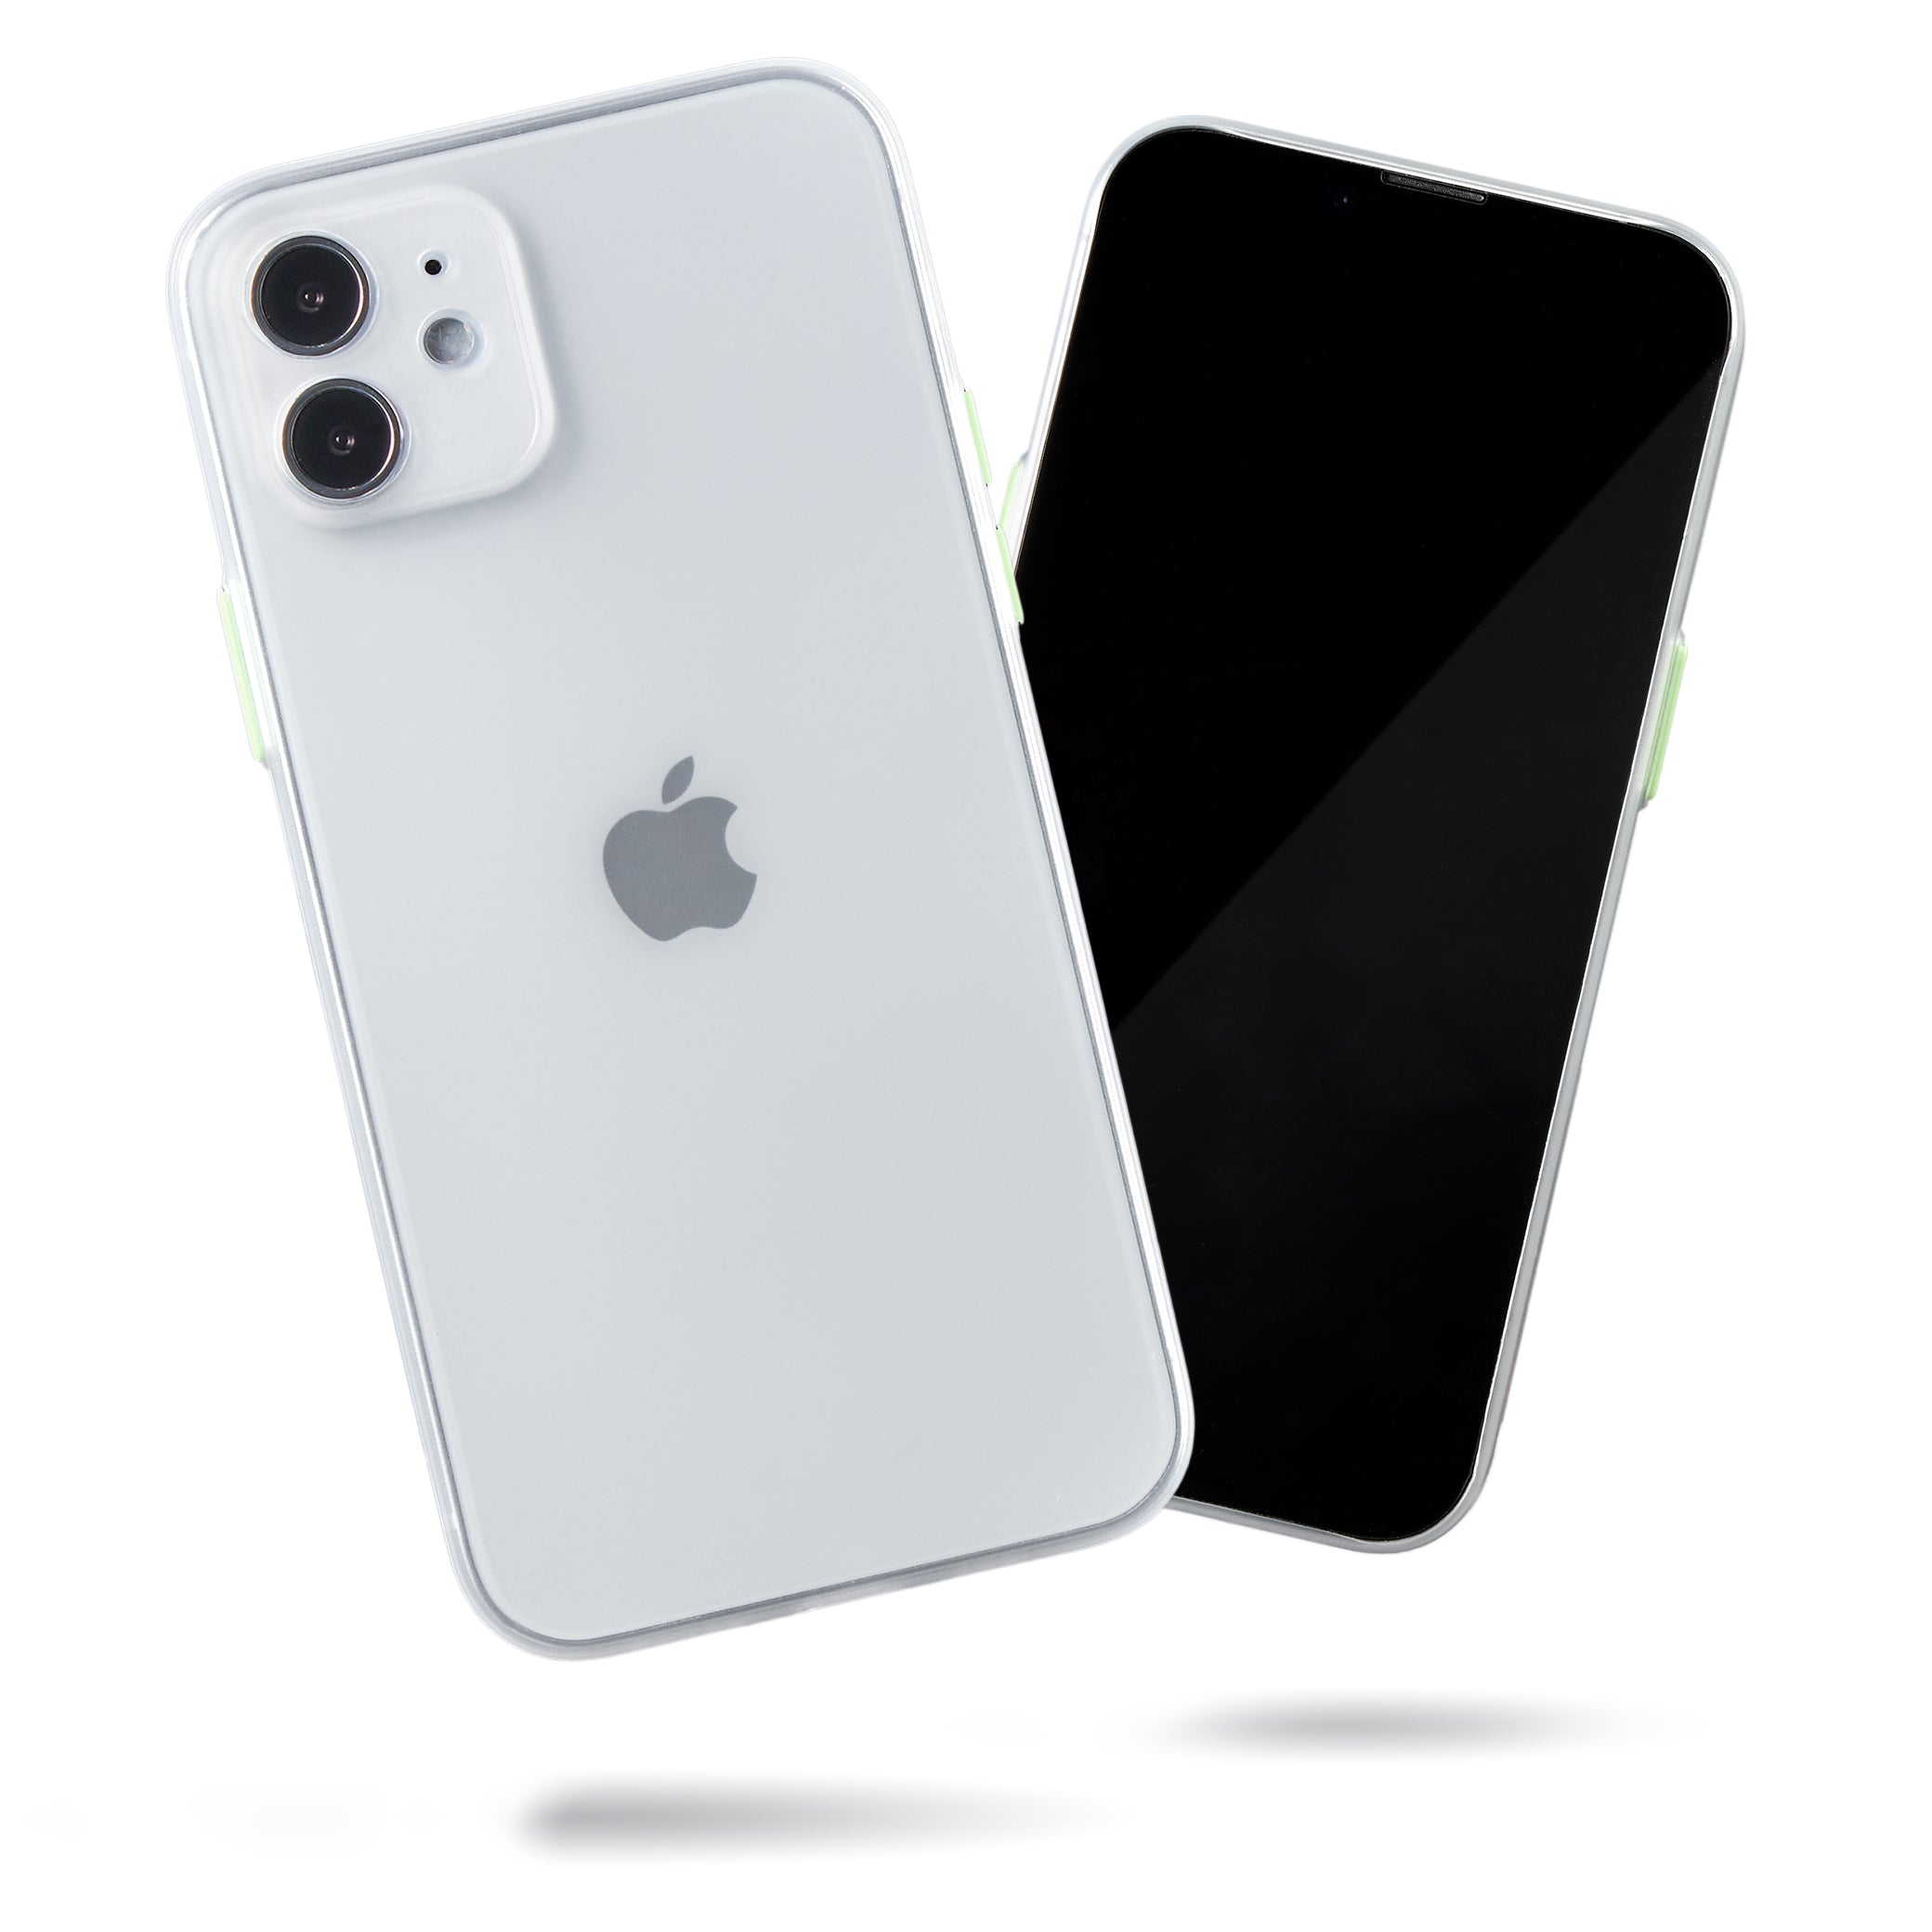 Super Slim Case 2.0 for iPhone 12 - Glazed Frost White